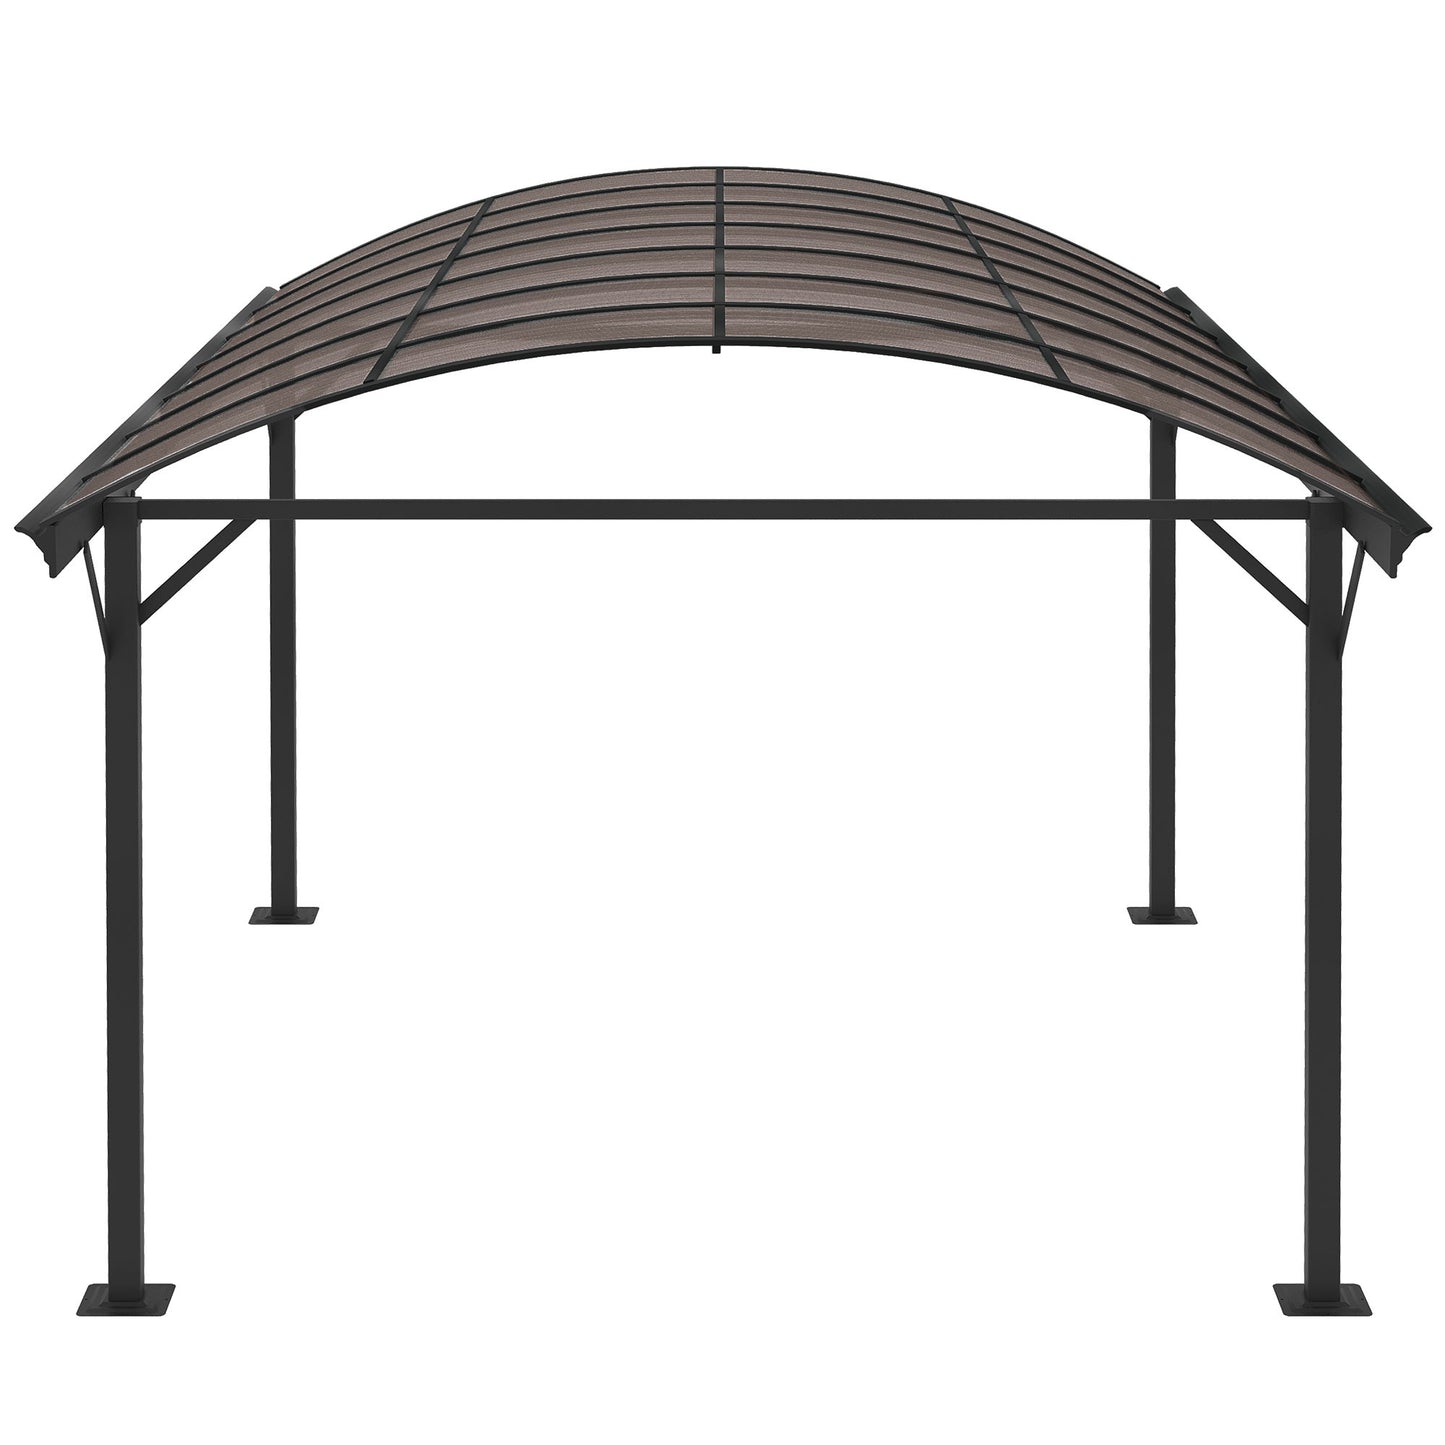 Outsunny 5 x 3(m) Hardtop Carport Aluminium Gazebo Pavilion Garden Shelter Pergola with Polycarbonate Roof, Brown